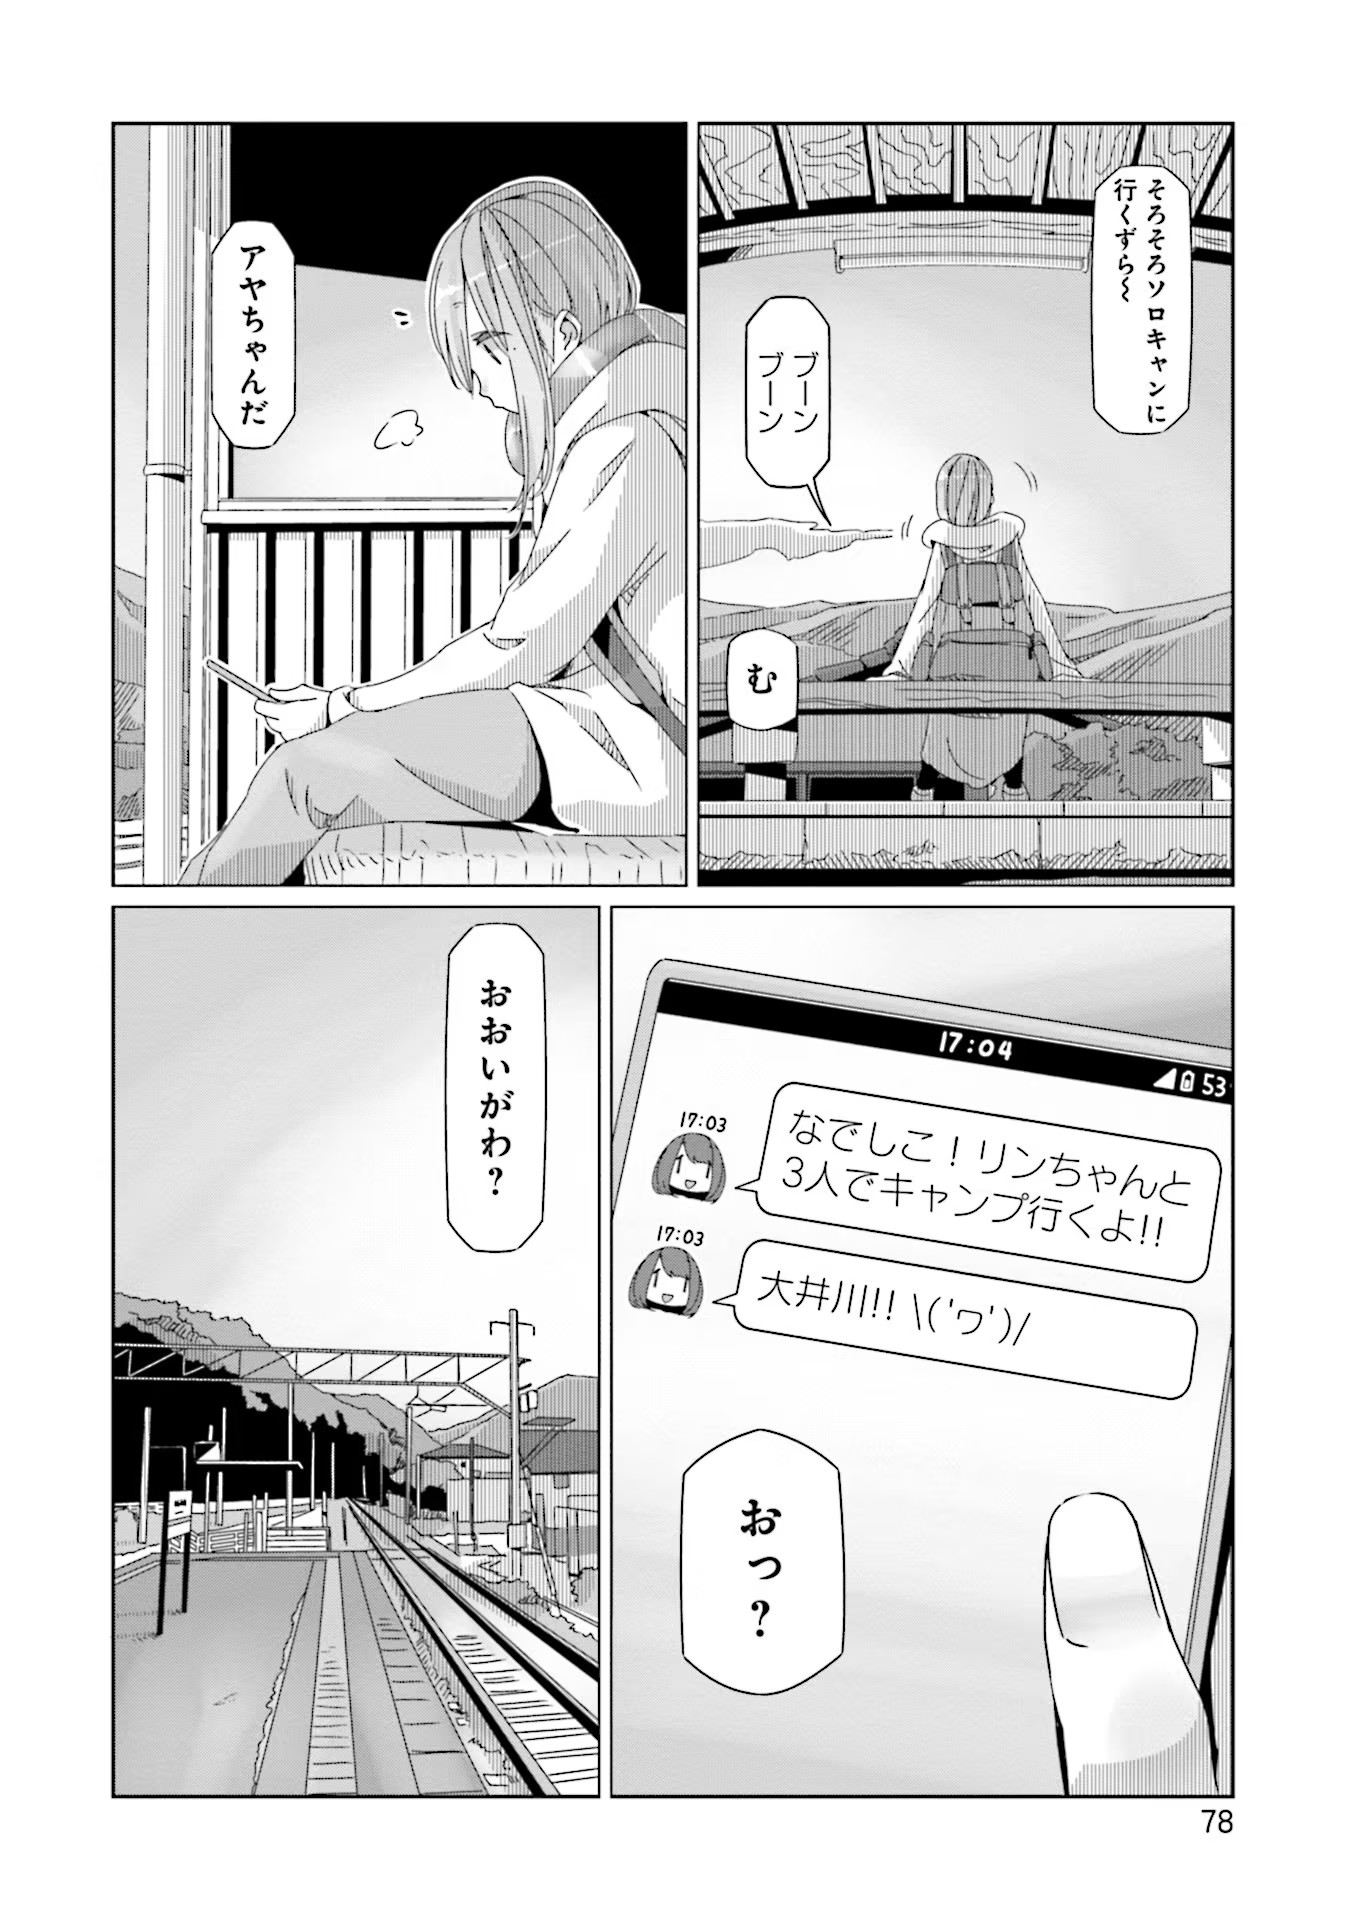 Yuru Camp - Chapter 55 - Page 24